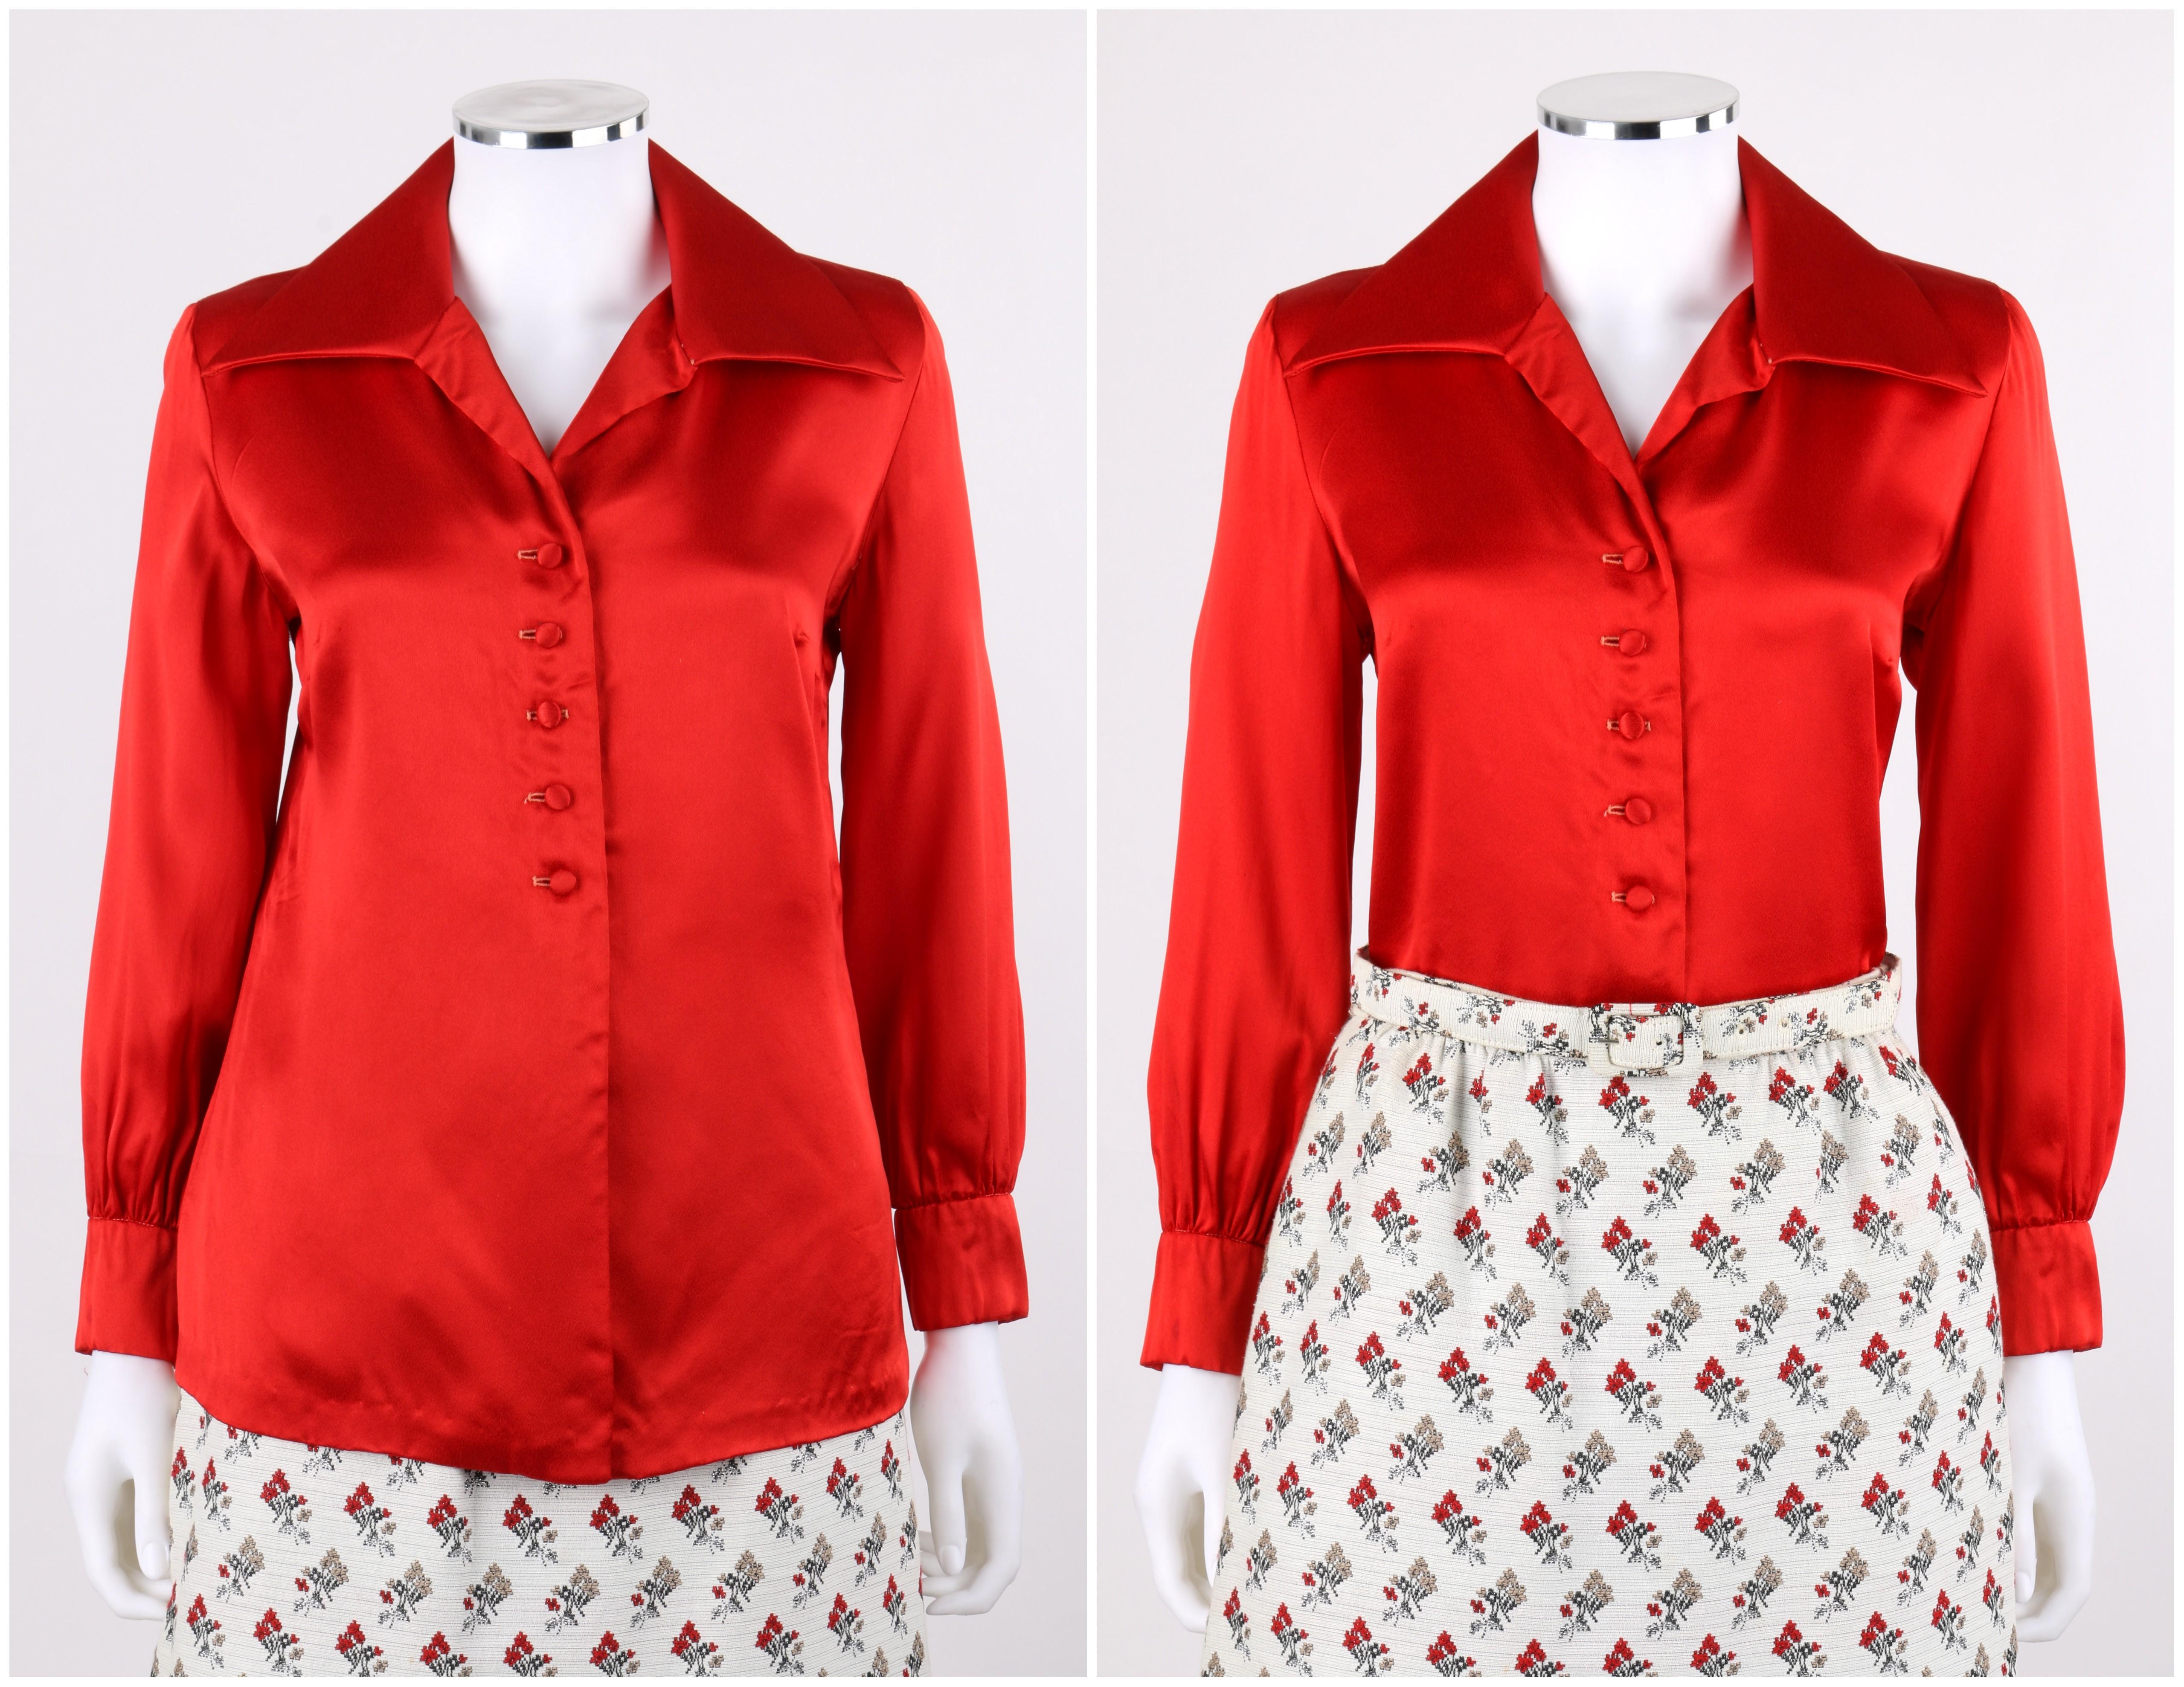 DESCRIPTION: NELLY DE GRAB c.1960's 2Pc Red Satin Blouse Floral Jacquard Maxi Skirt Dress Set
 
Circa: c.1960’s
Label(s): Nelly de Grab New York
Designer: Nelly De Grab
Style: Two piece dress set
Color(s): Red, off white, multi floral print in